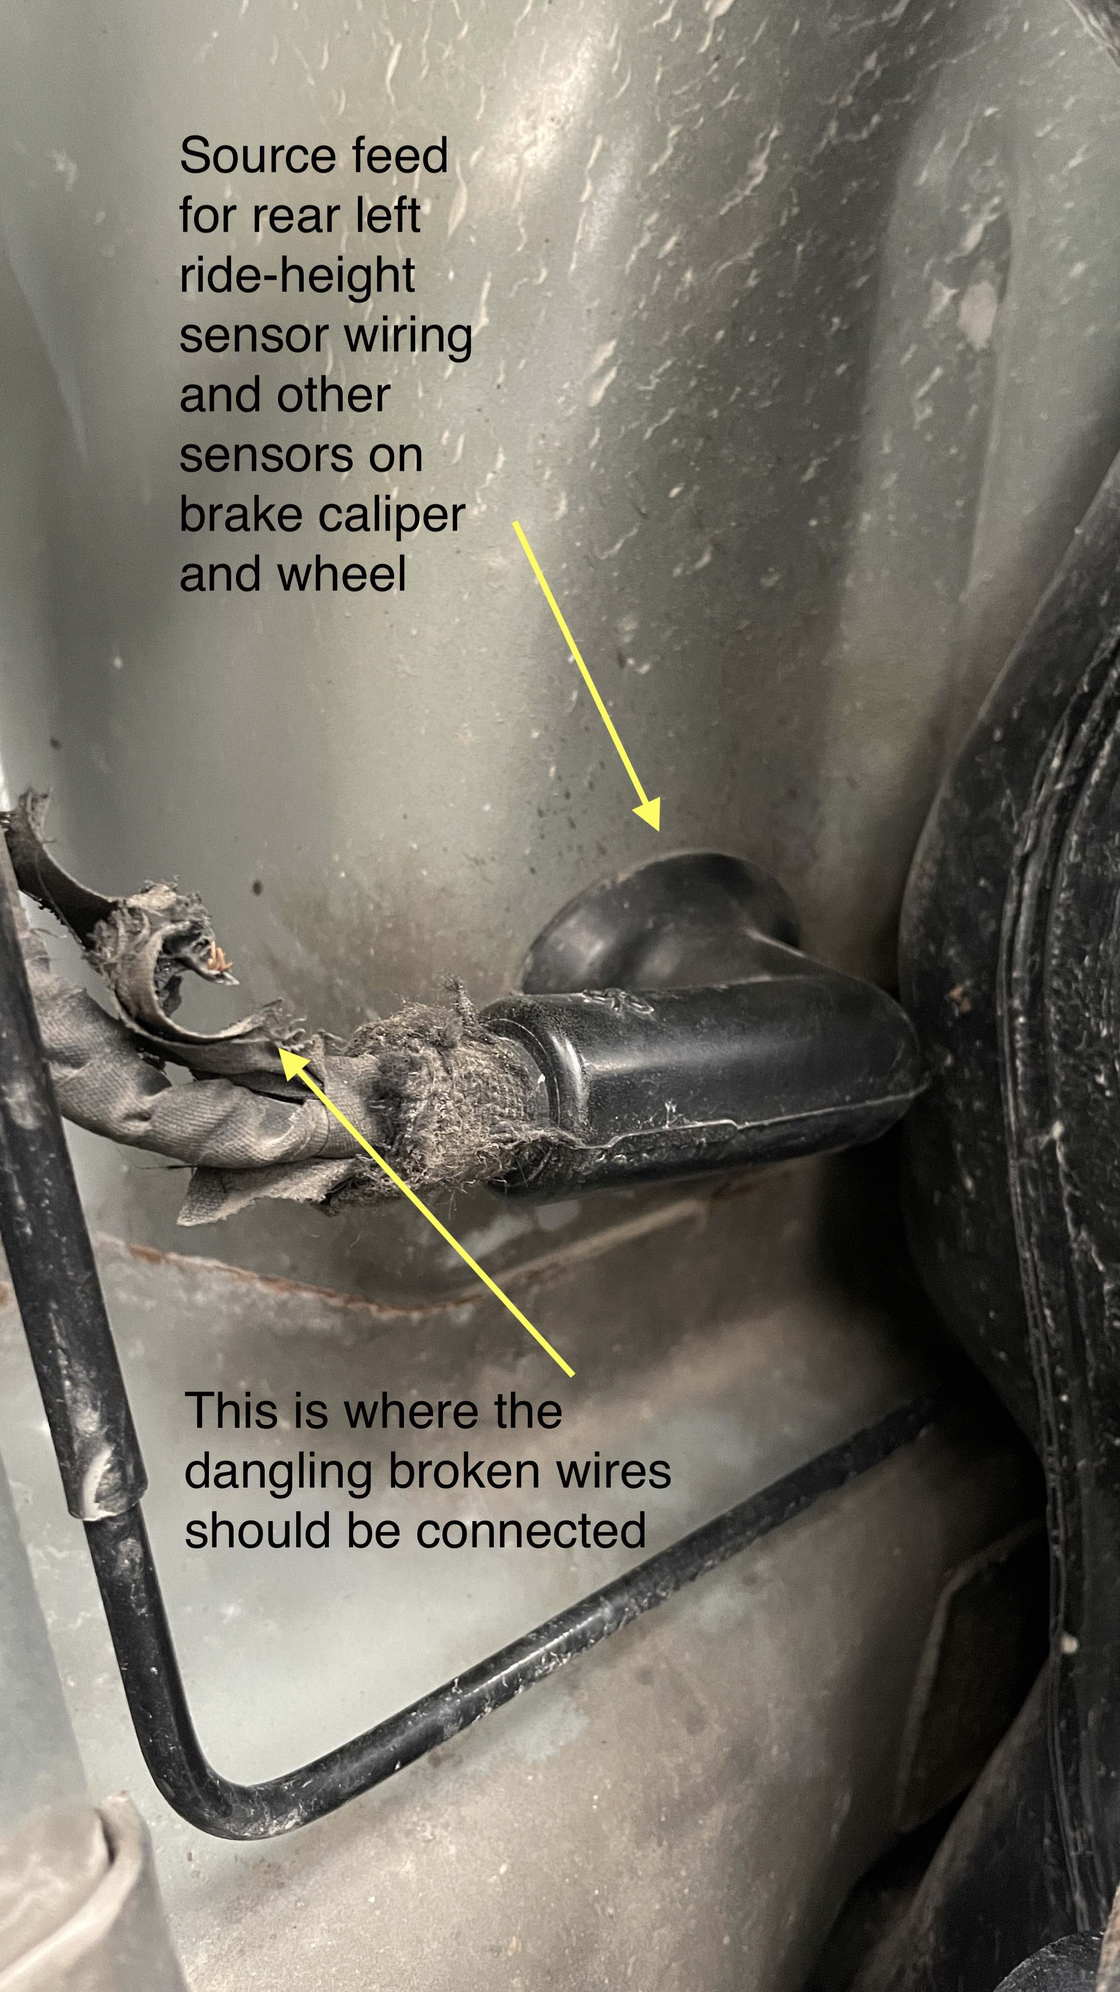 2014 Q7 Rear Left Ride-Height Sensor Broken Wire - AudiWorld Forums